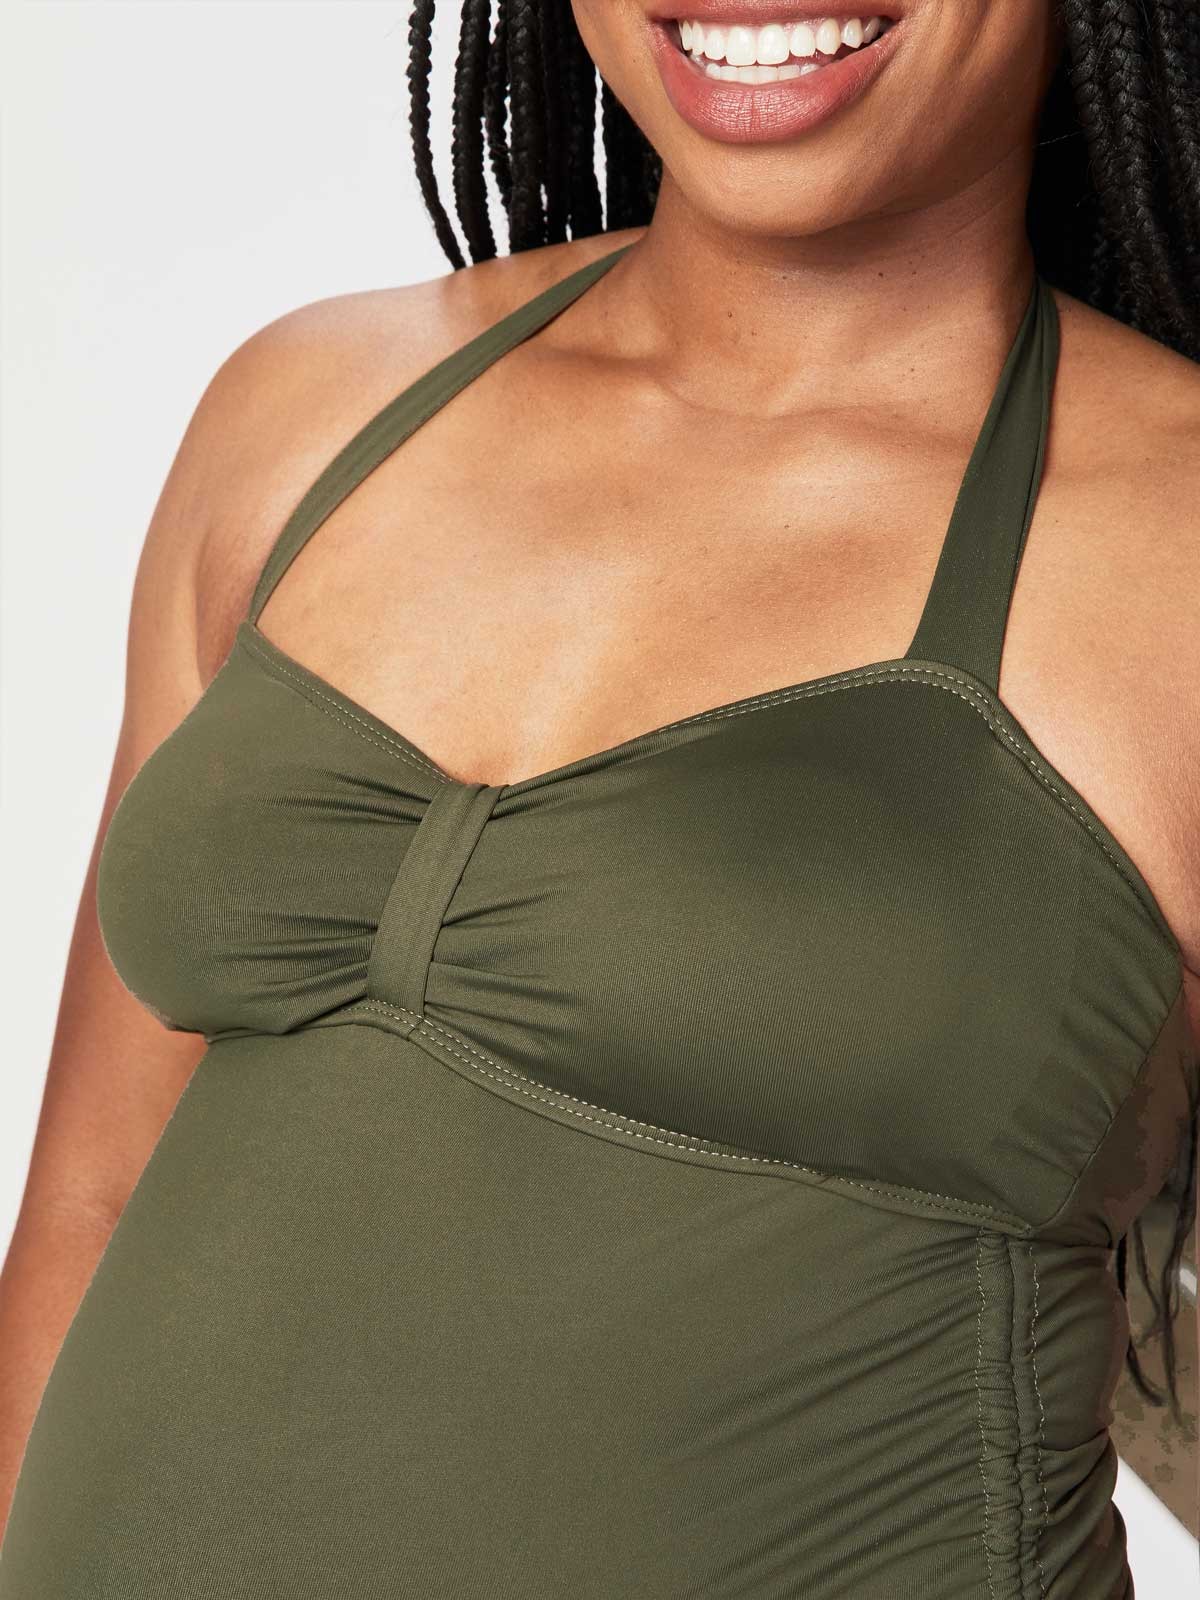 La Mer 3-Piece Tankini & Bikini Set Maternity Swimsuit - Brown – Mums and  Bumps